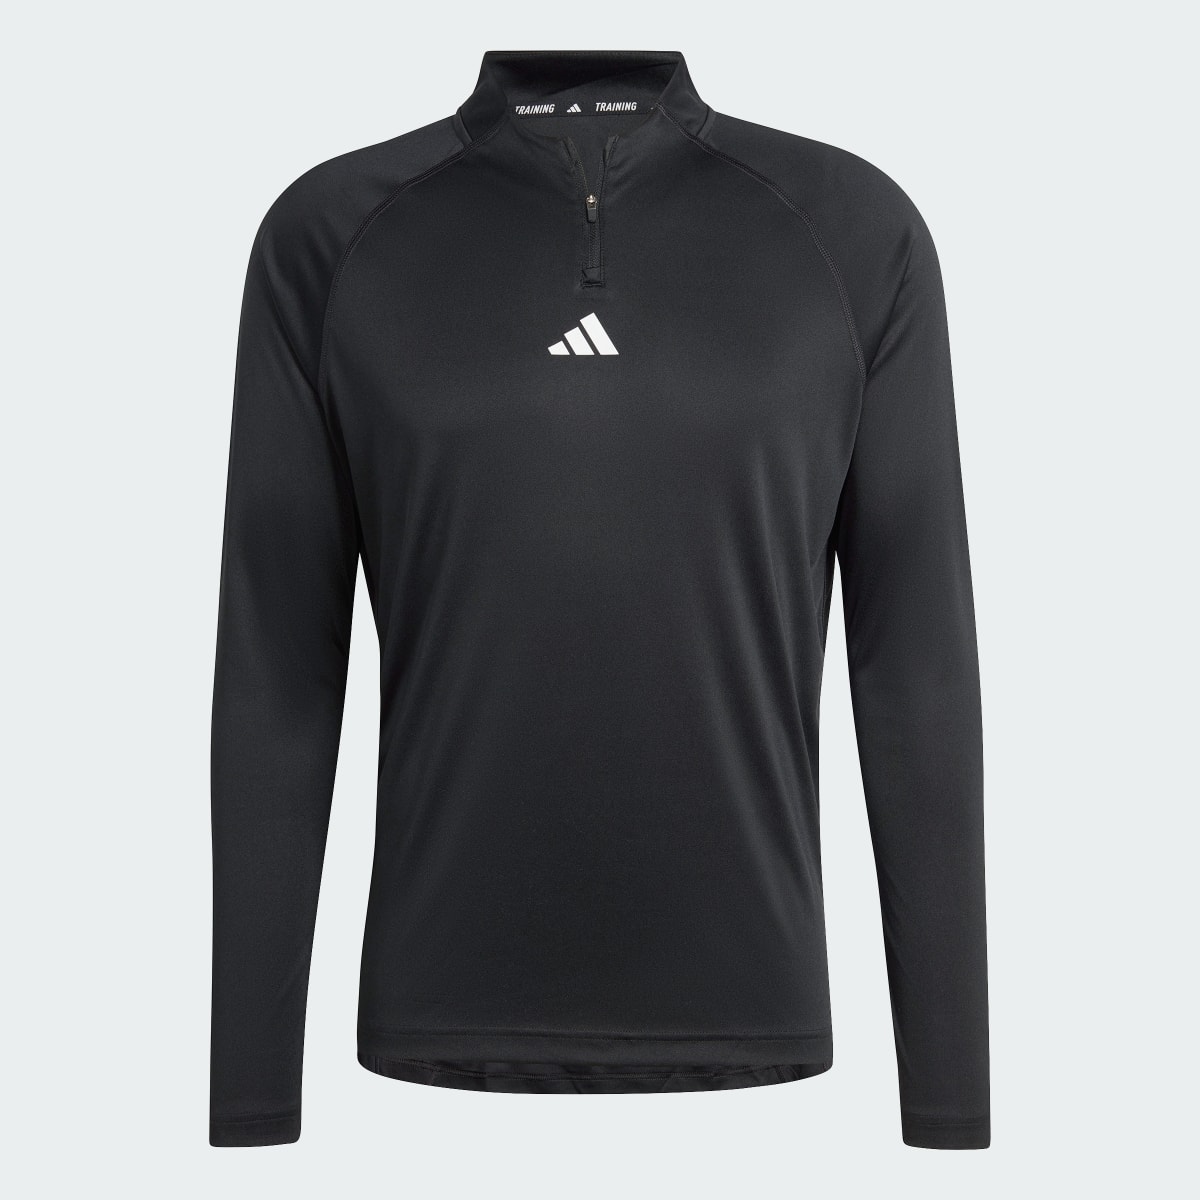 Adidas Gym Heat Quarter-Zip Long Sleeve Tee. 5